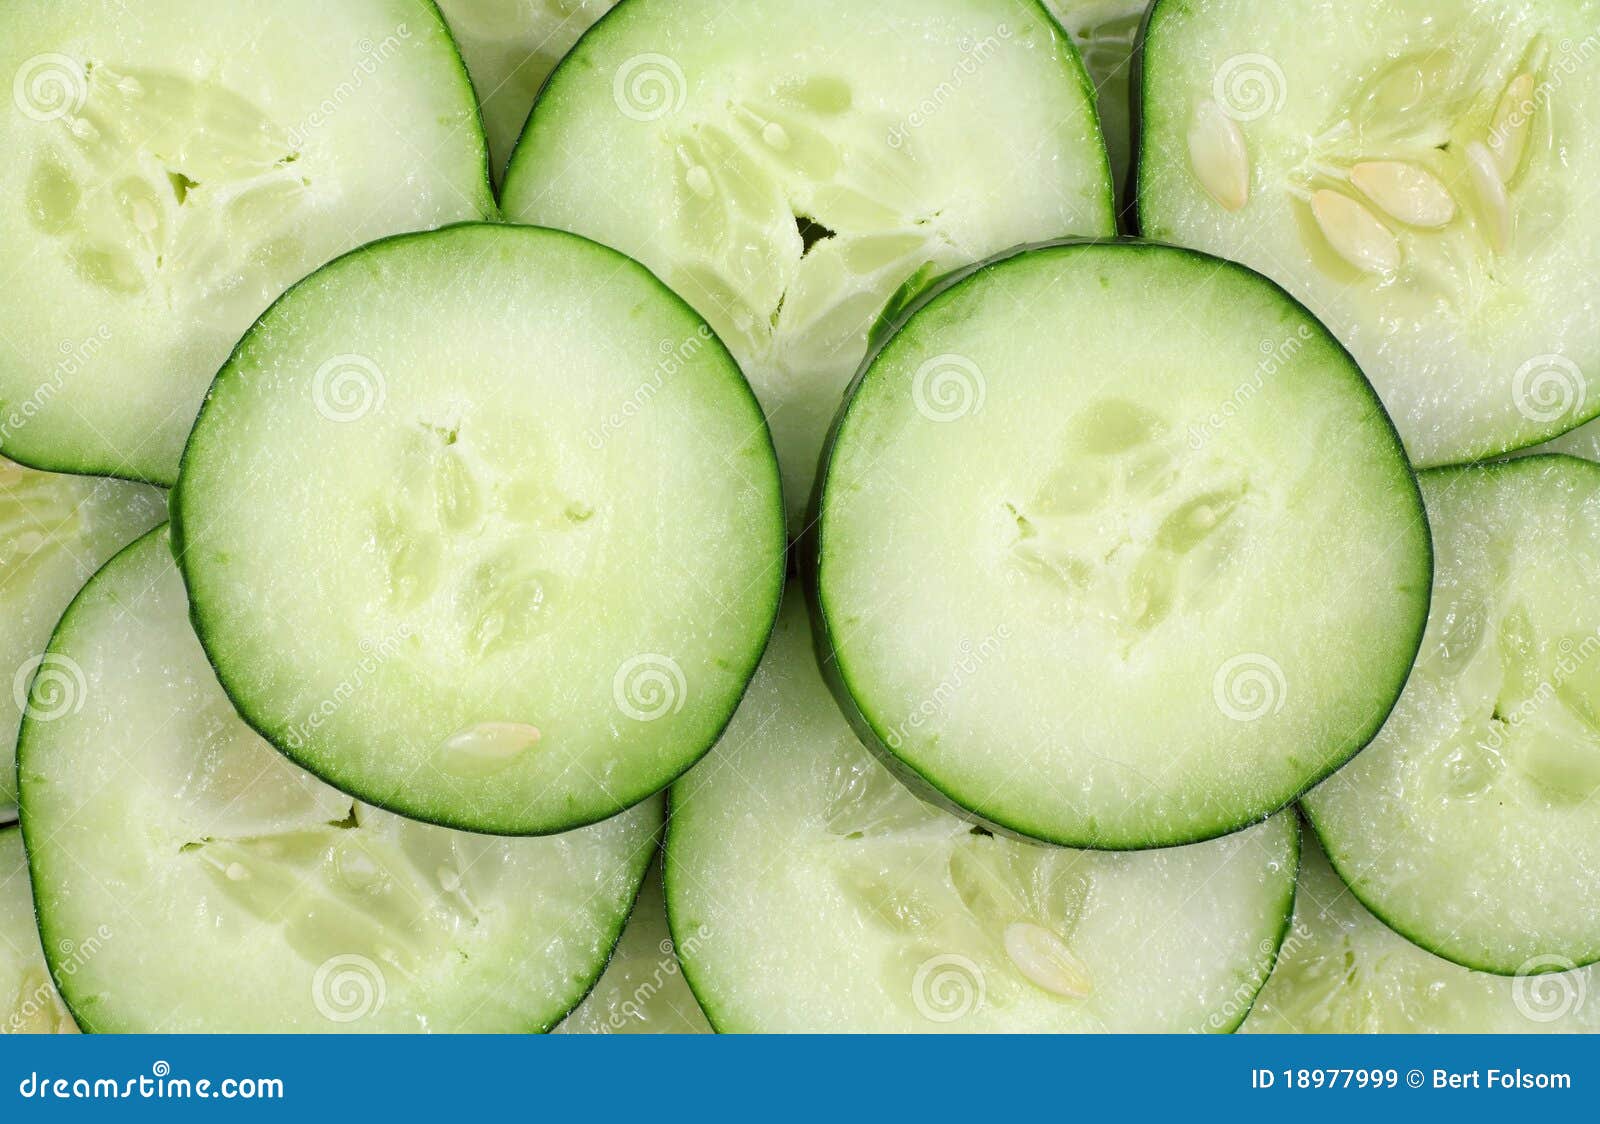 sliced organic cucumbers